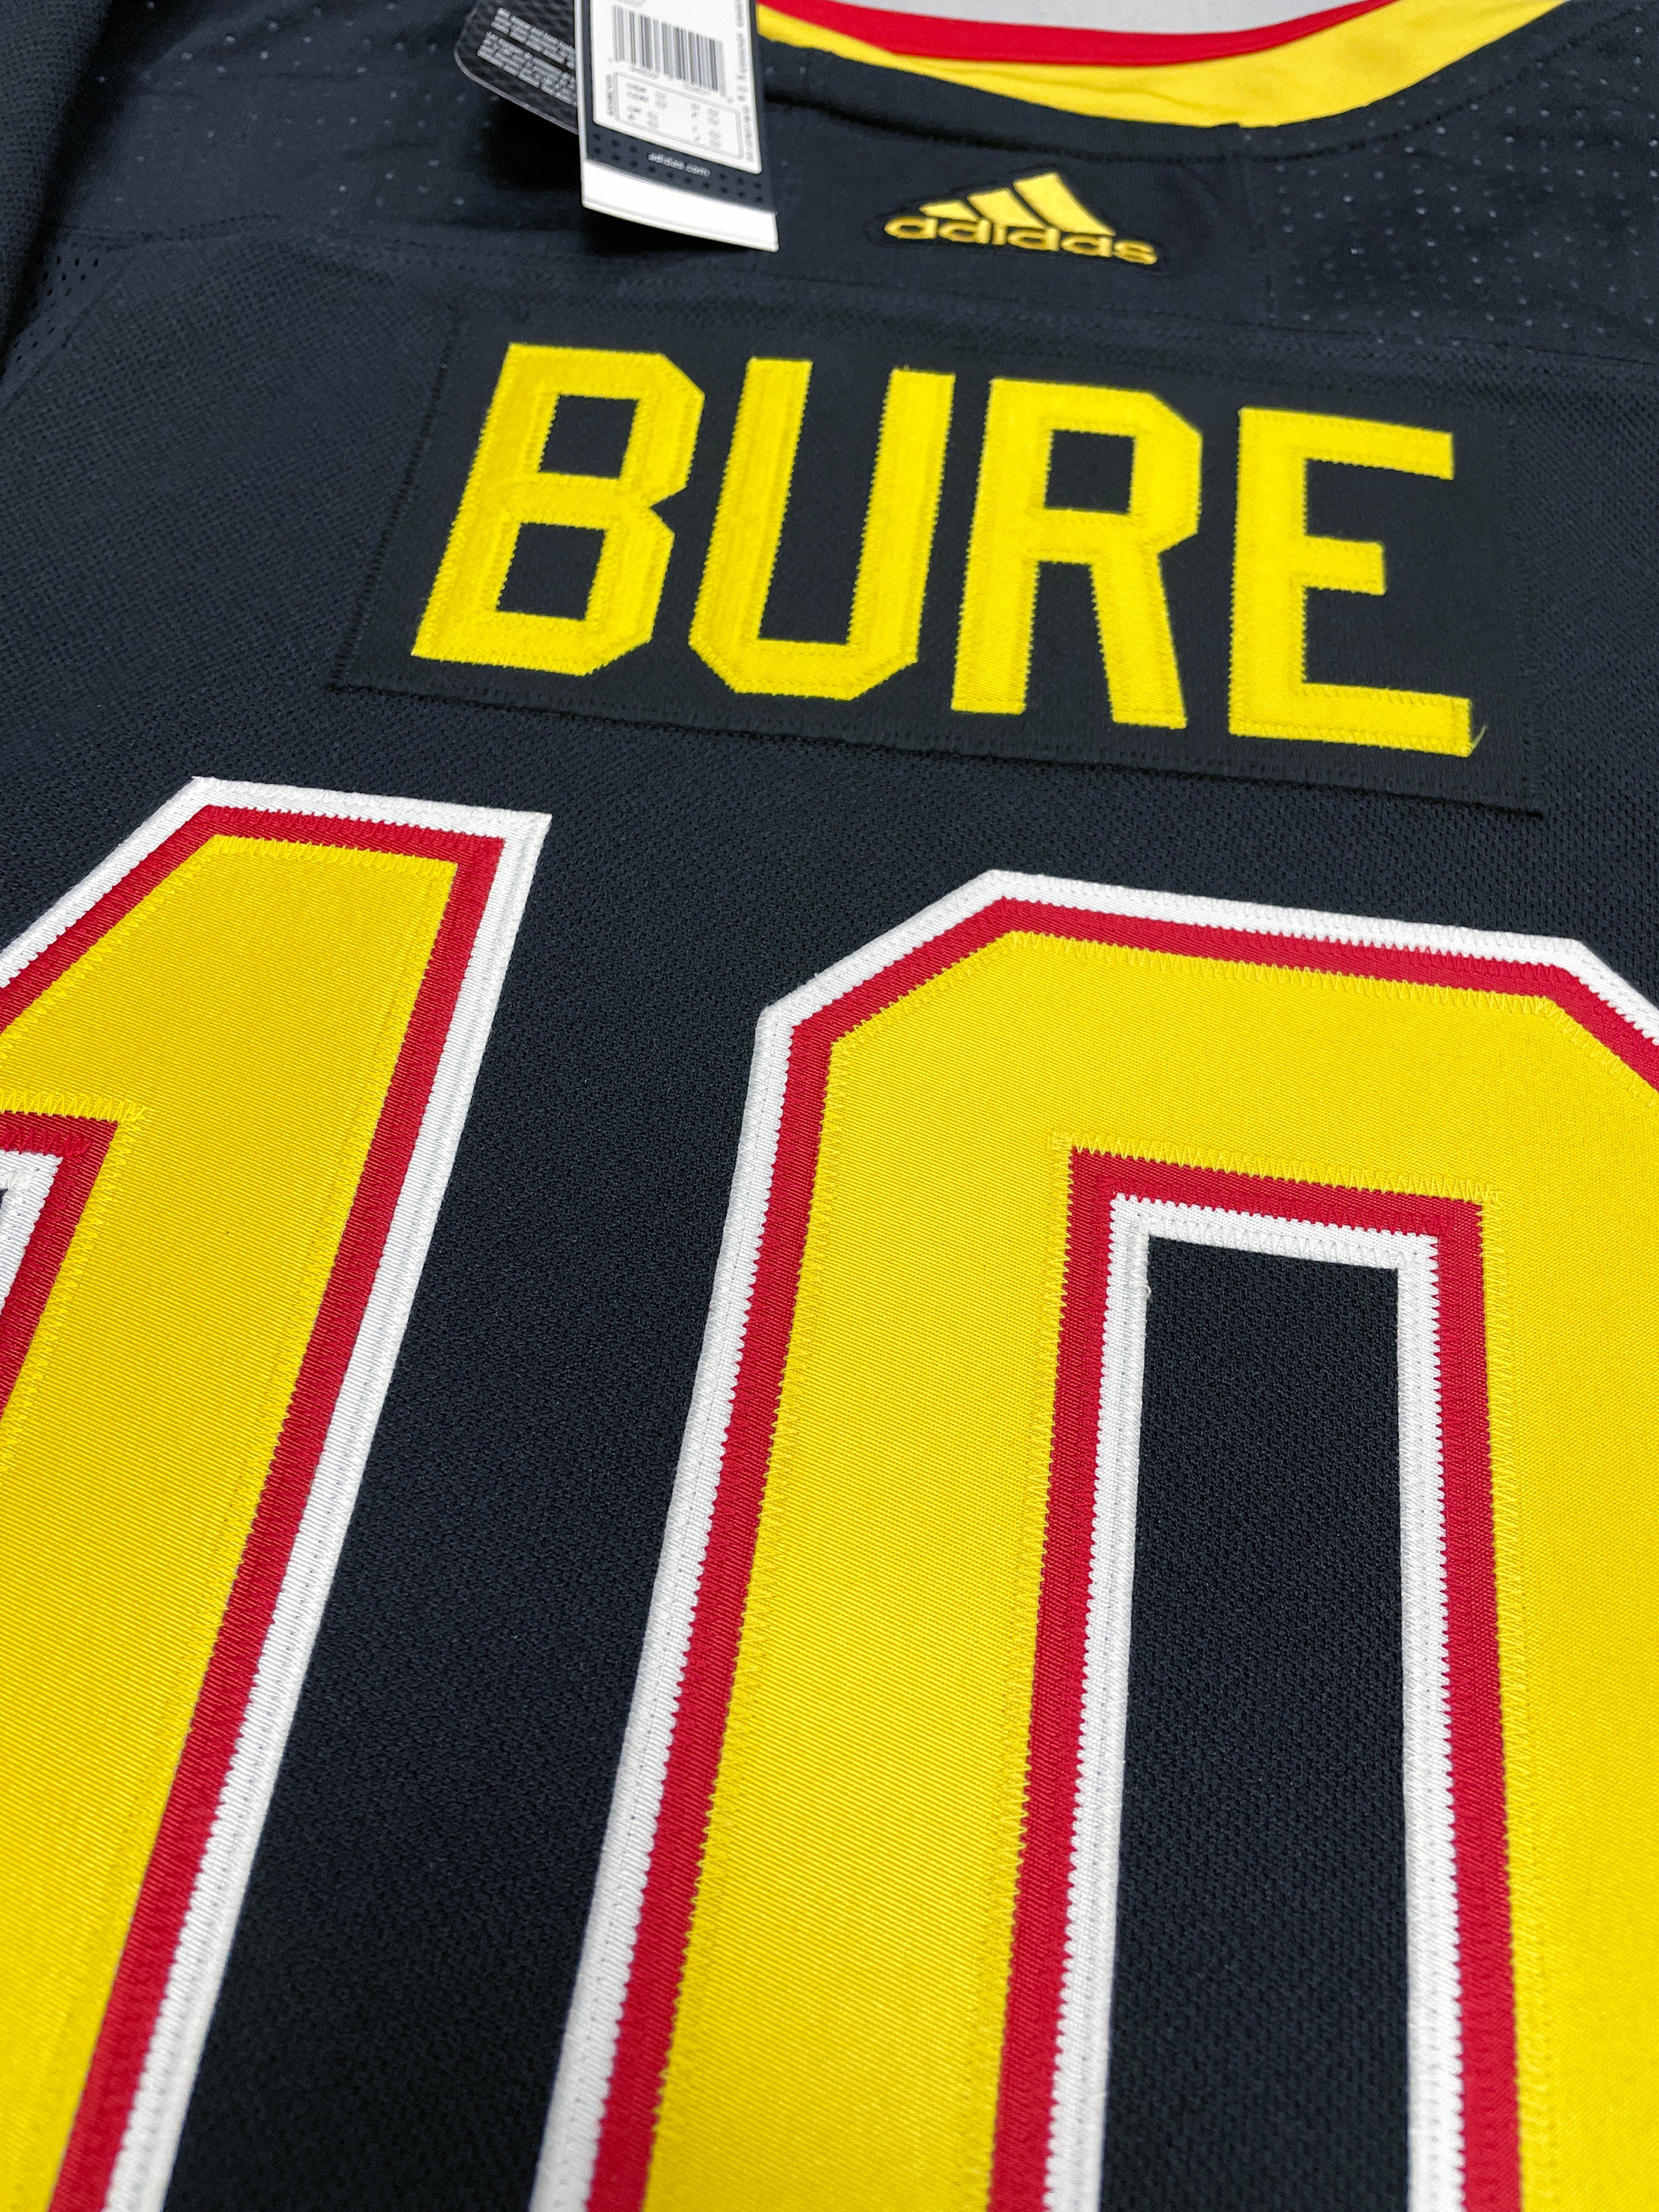 Pavel Bure Autographed Vancouver Canucks Pro Jersey